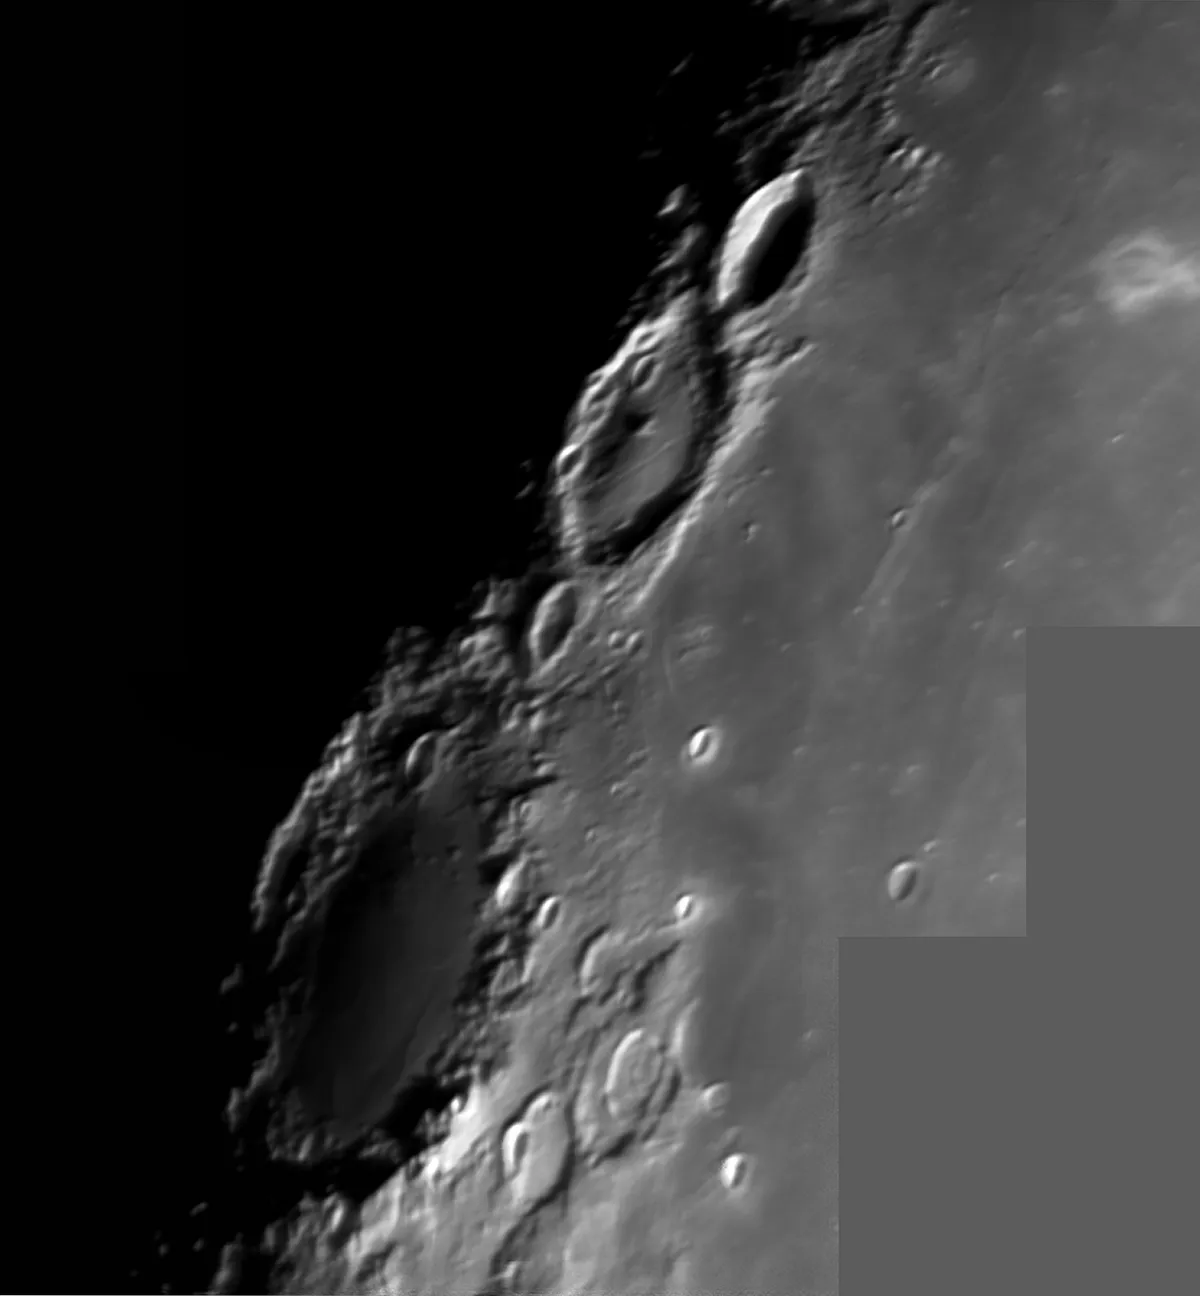 Grimaldi Moon Crater by Simon Hollingdale, East Sussex, UK. Equipment: 16